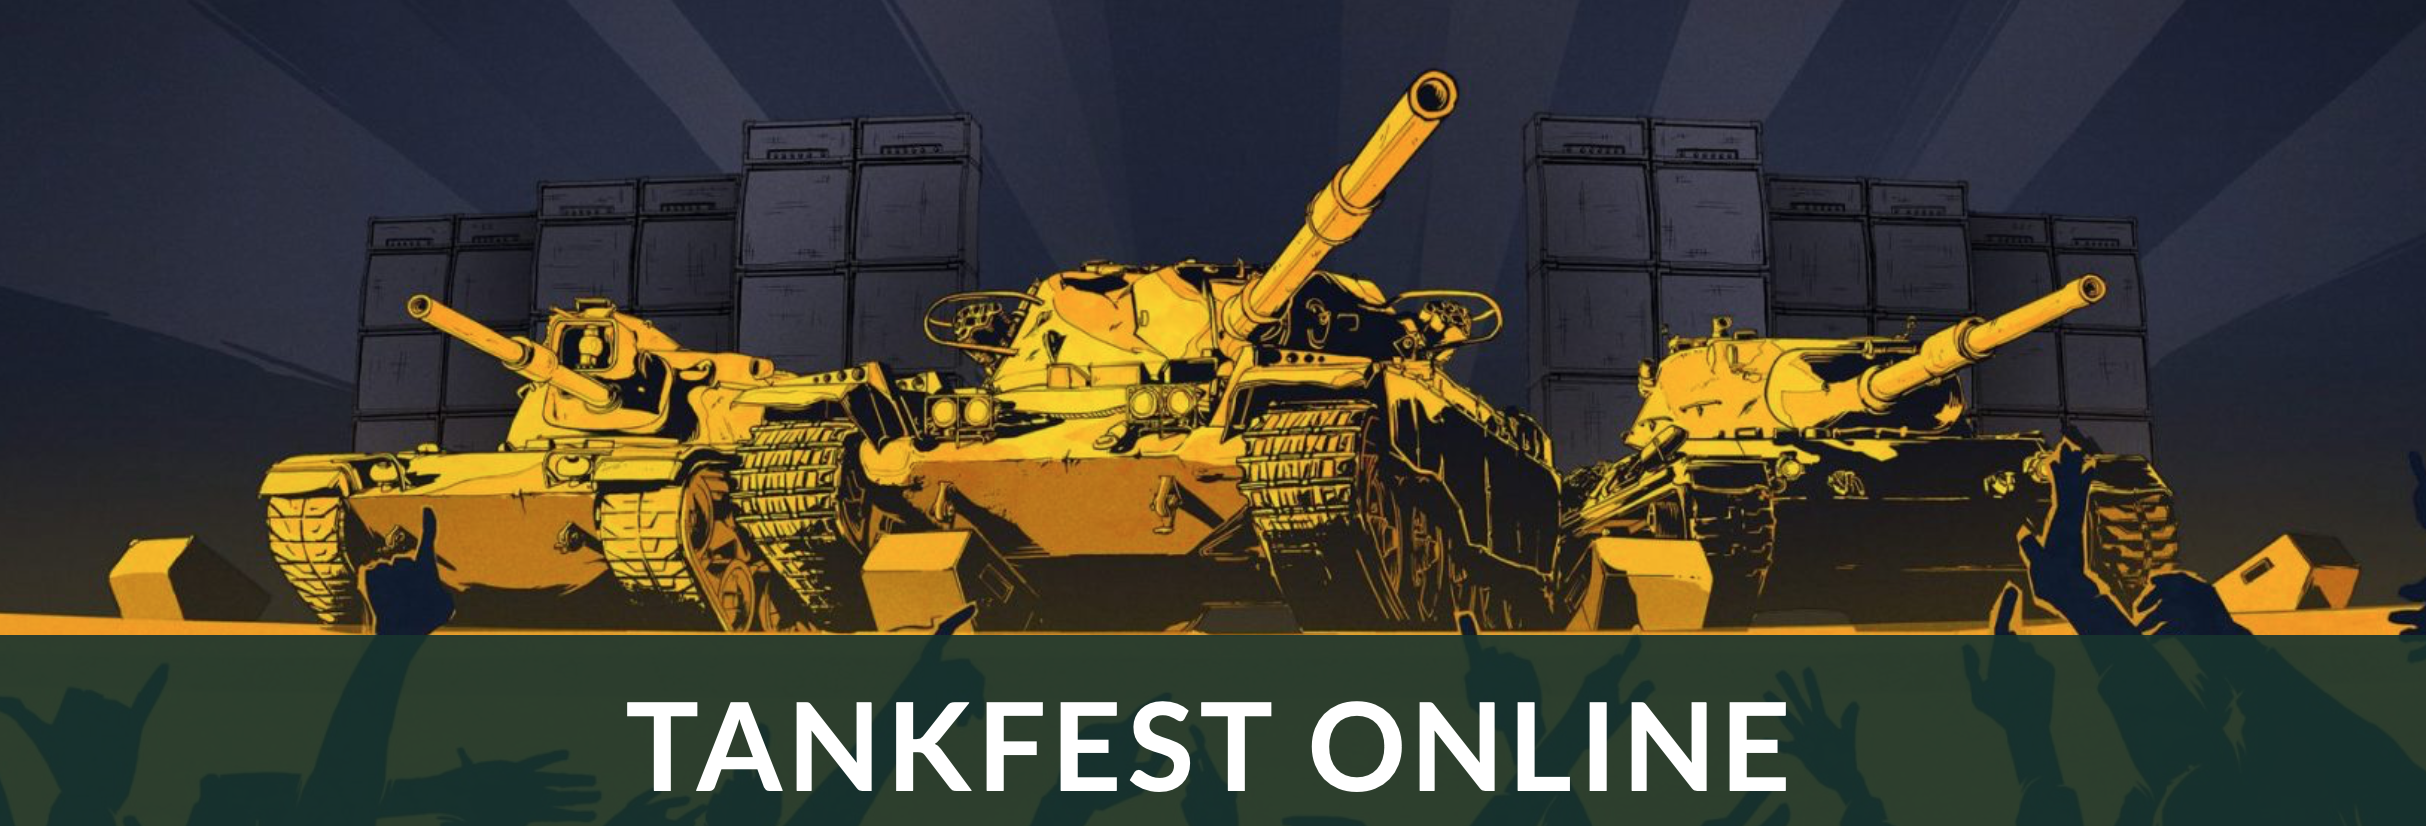 Tankfest Online